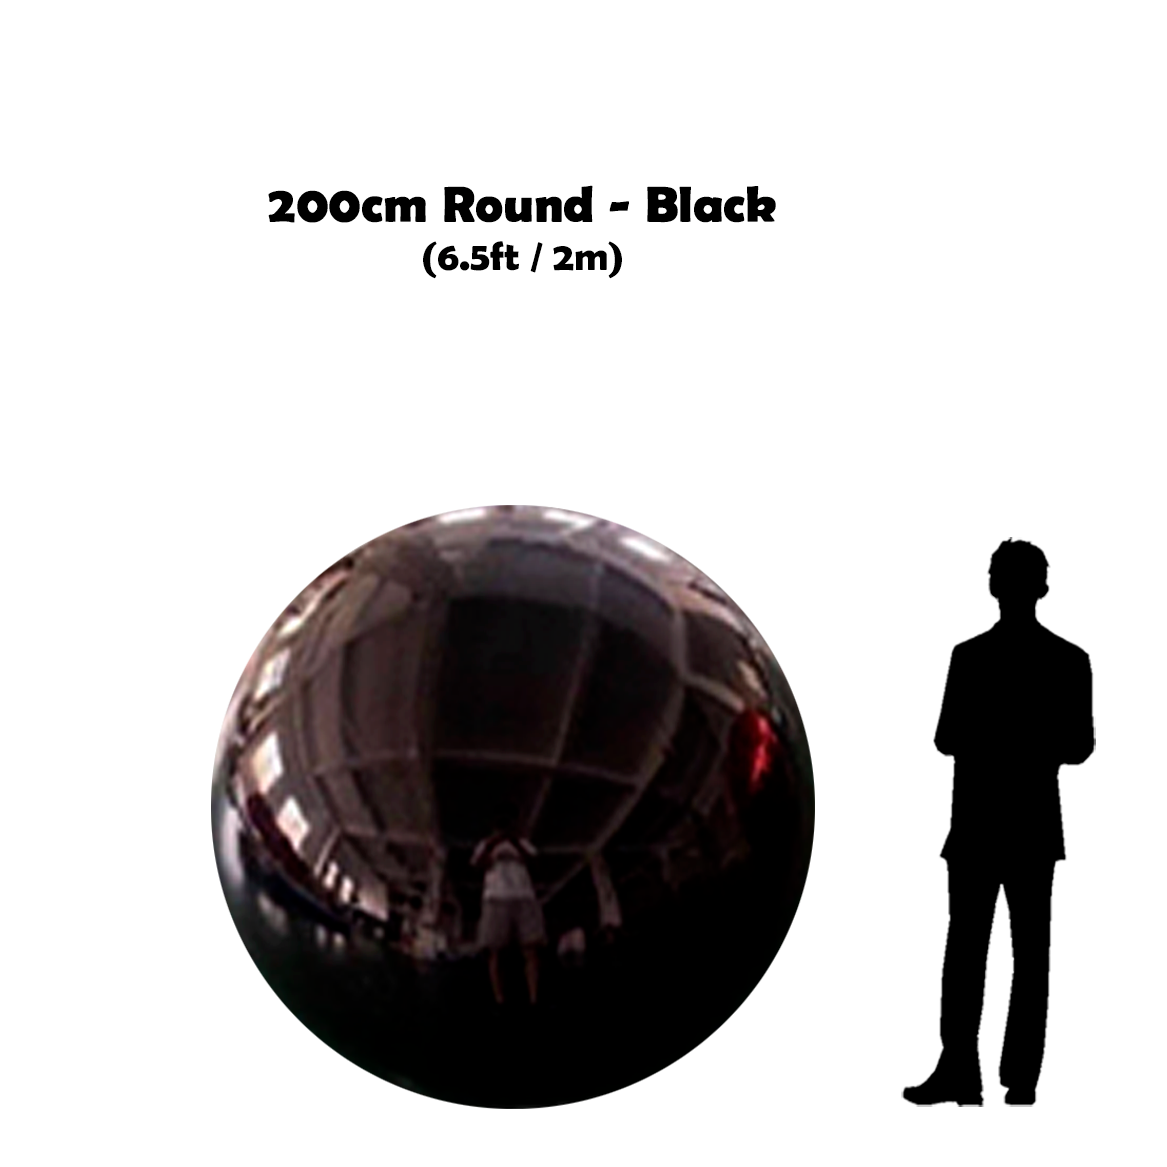 200 cm Big Black ball beside 5'10 guy silhouette 